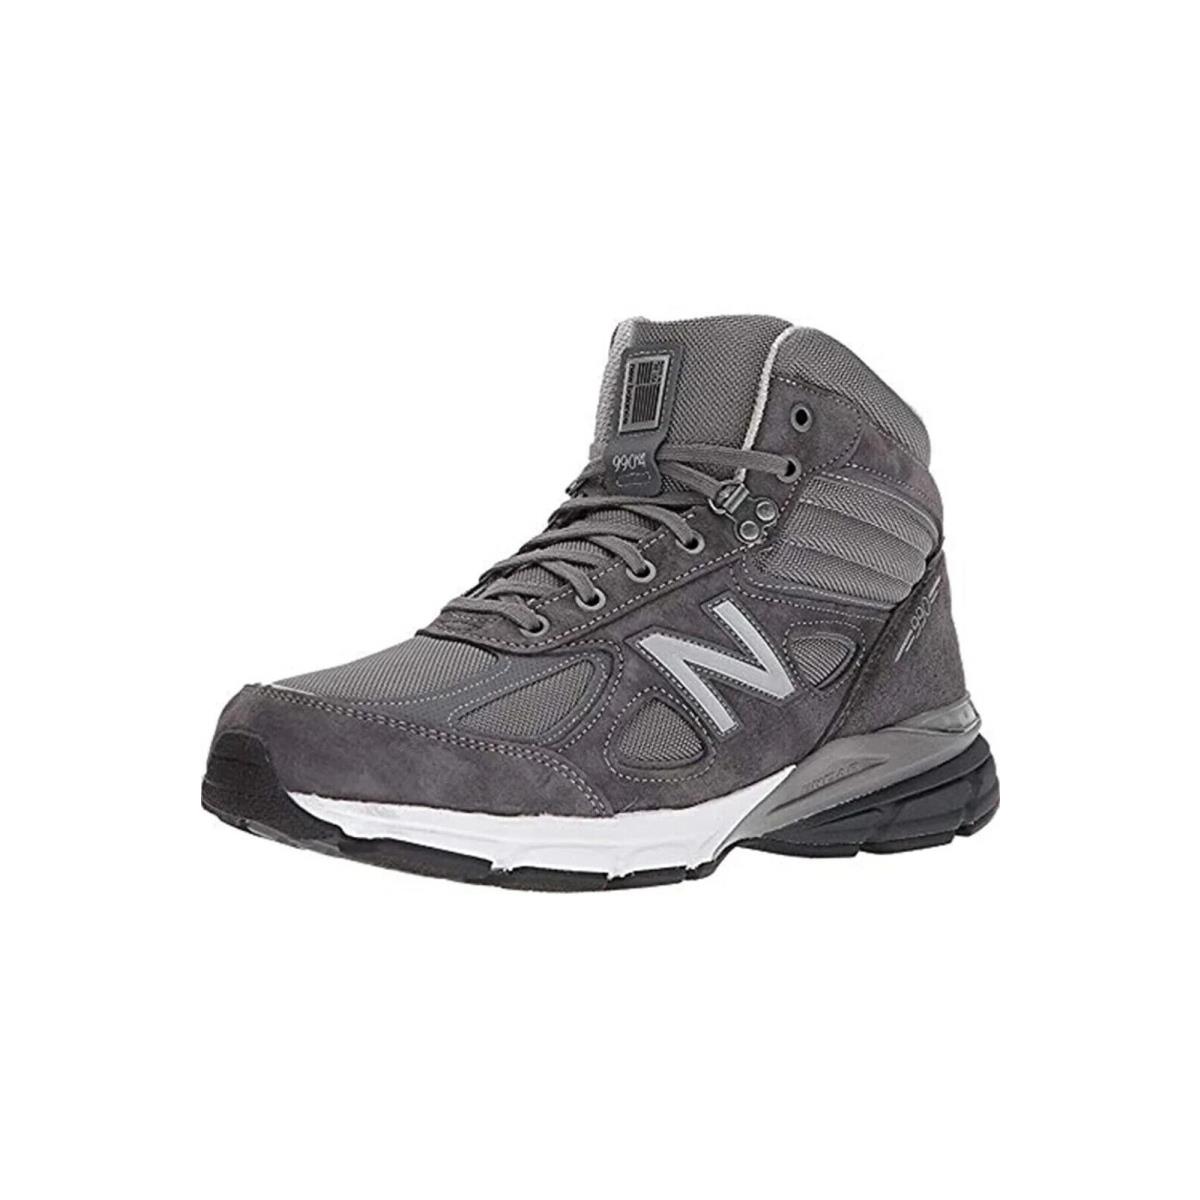 Mens New Balance 990 v4 Mid Grey Suede Hiking Shoe Size 11.5 2E